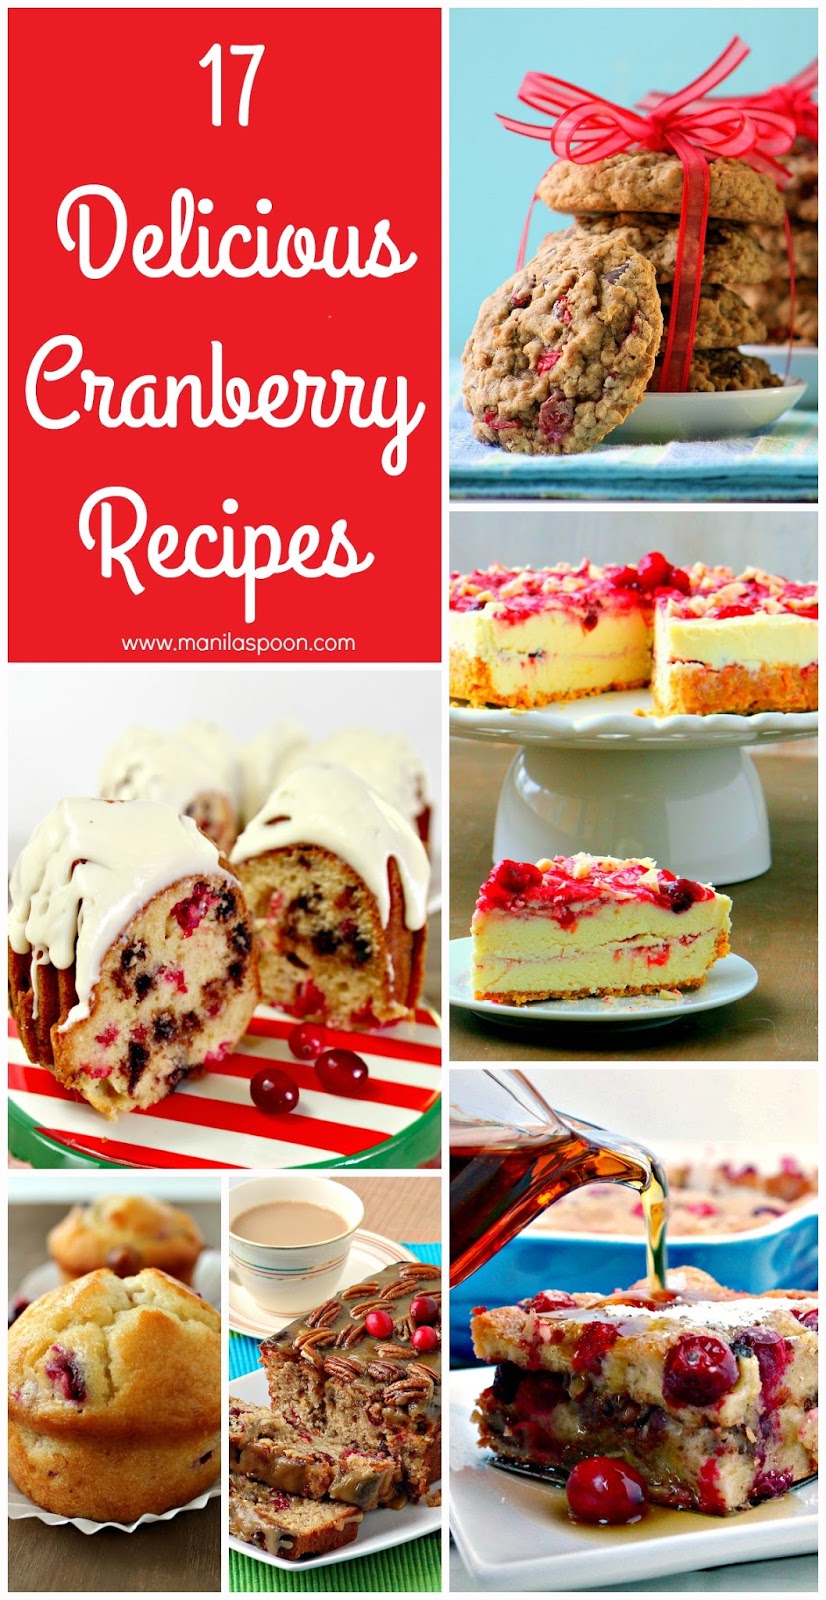 17 Delicious Cranberry Recipes